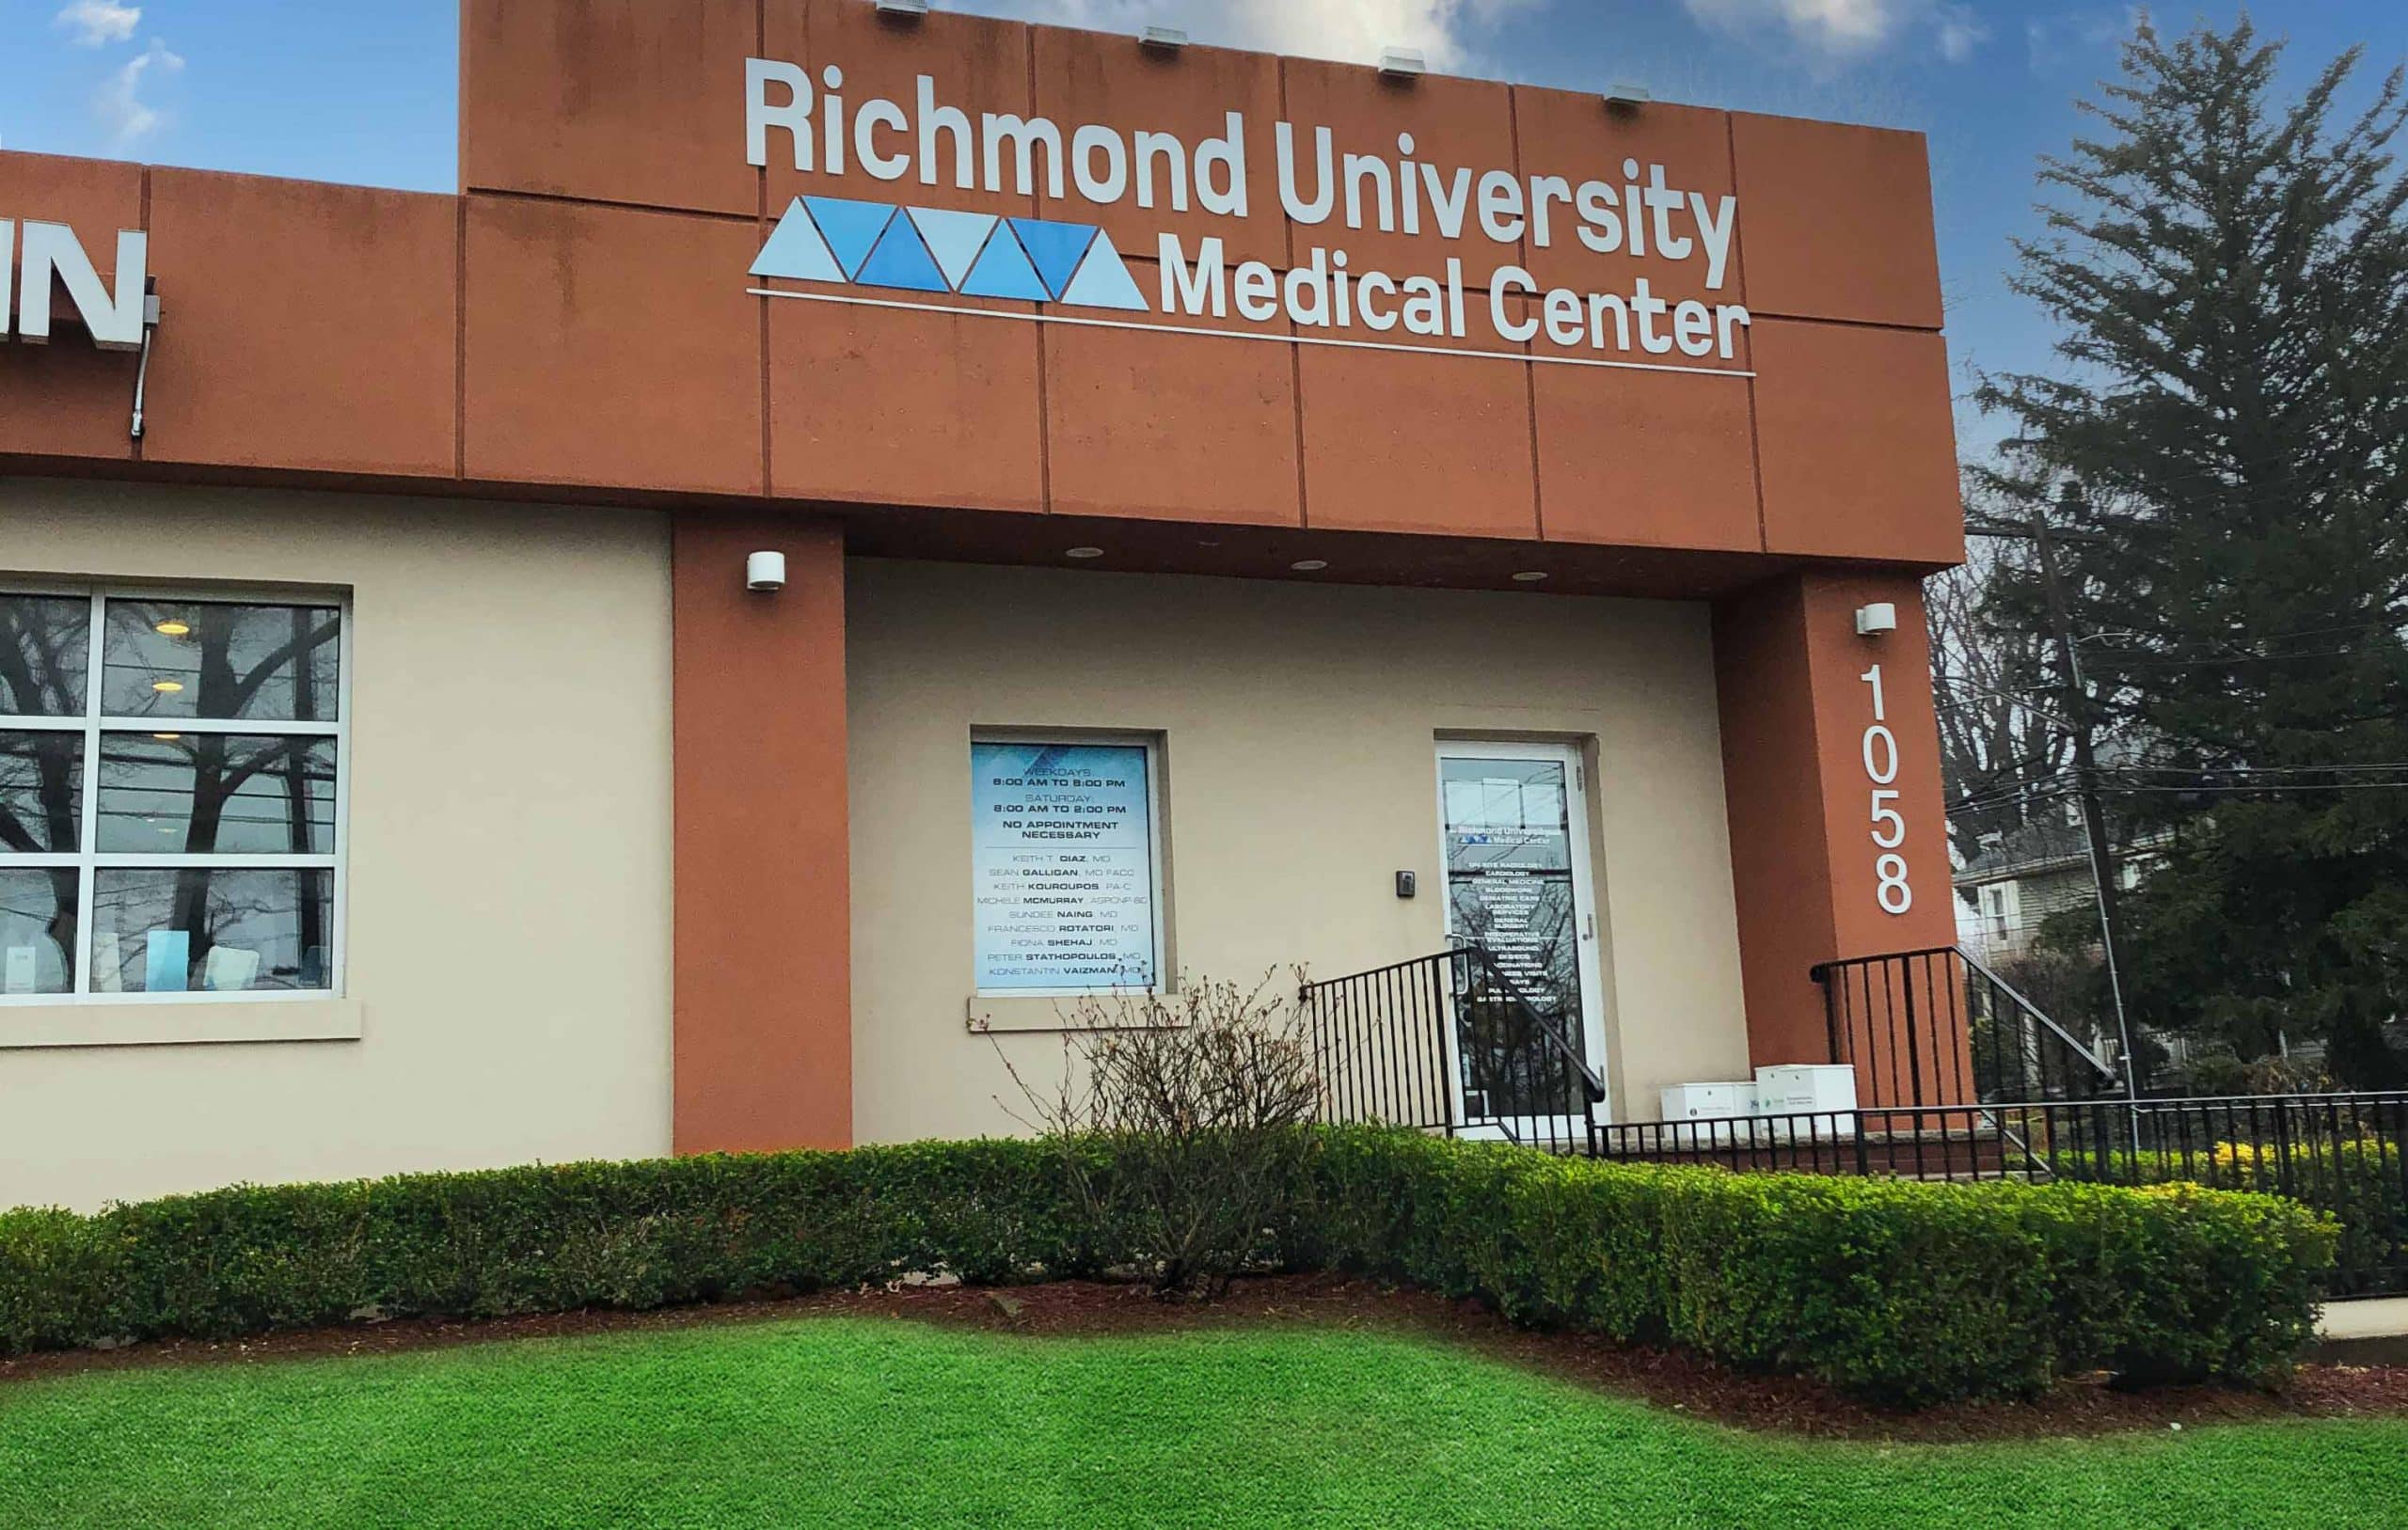 Primary Walk-incardiology Staten Island - Richmond University Medical Center